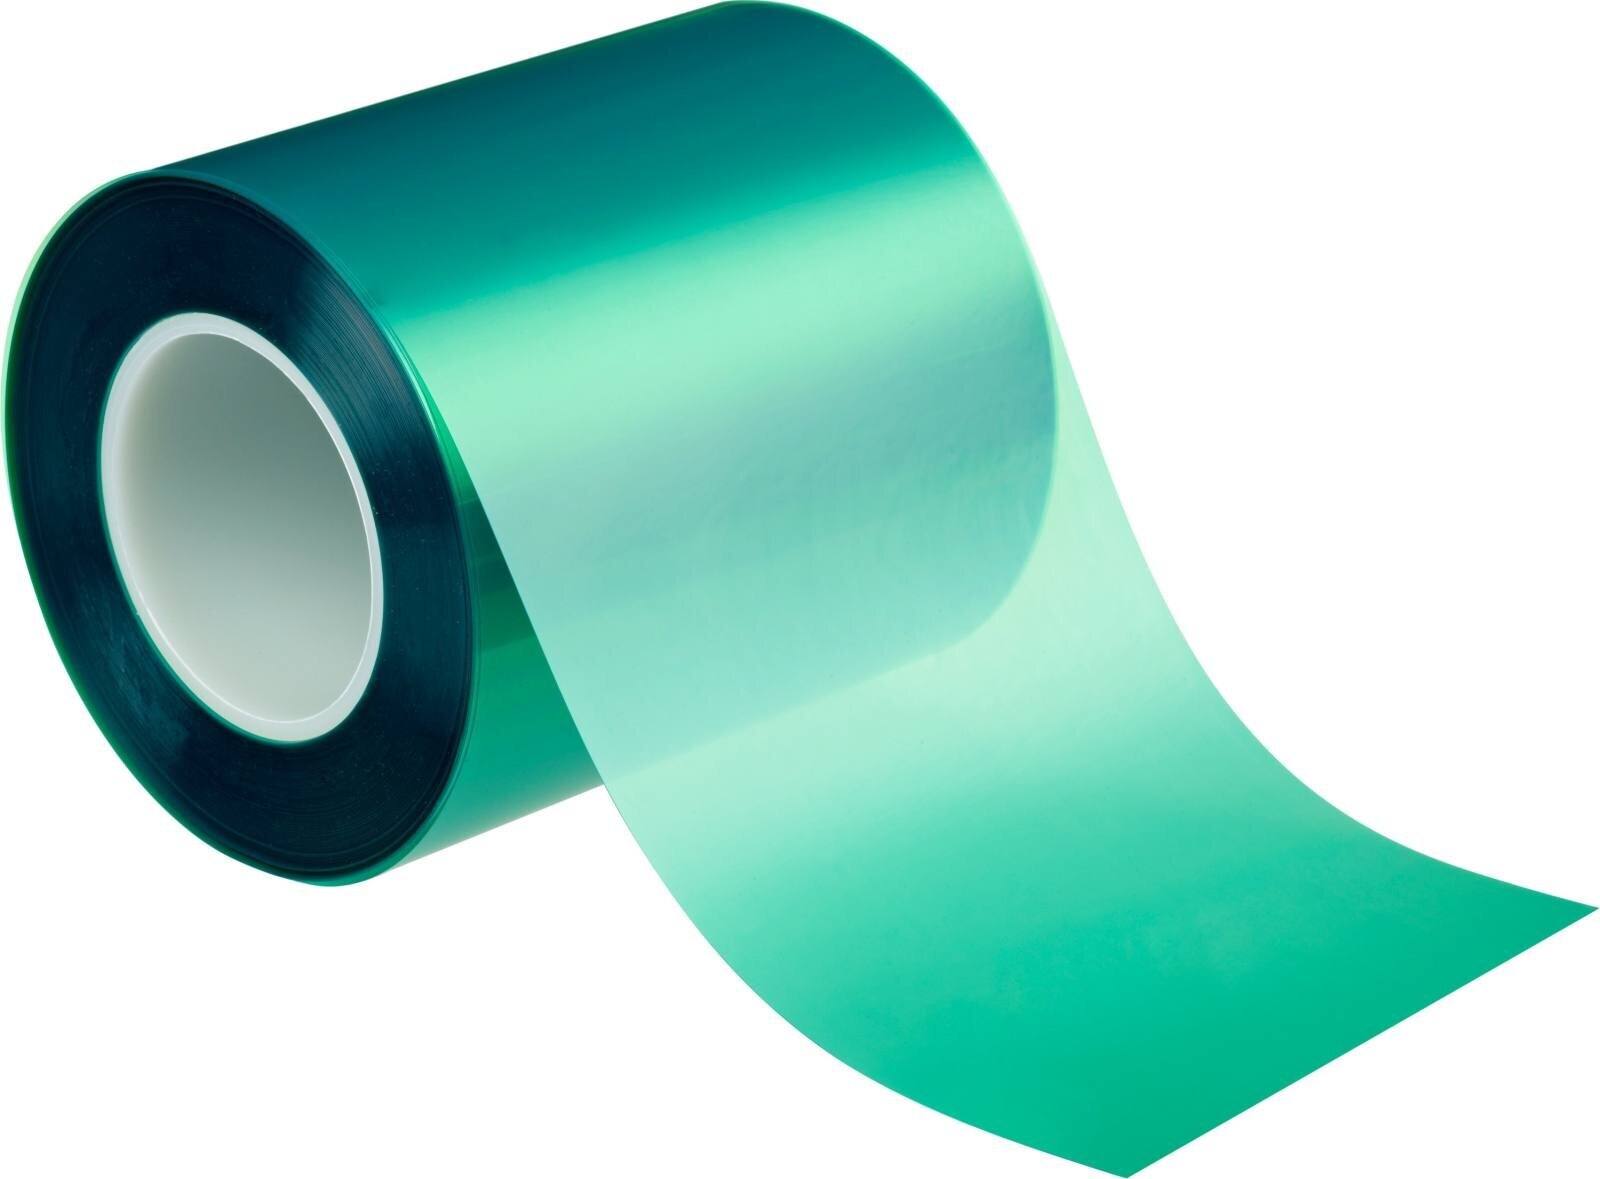 3M polyester masking tape 8992, green, 50 mm x 66 m